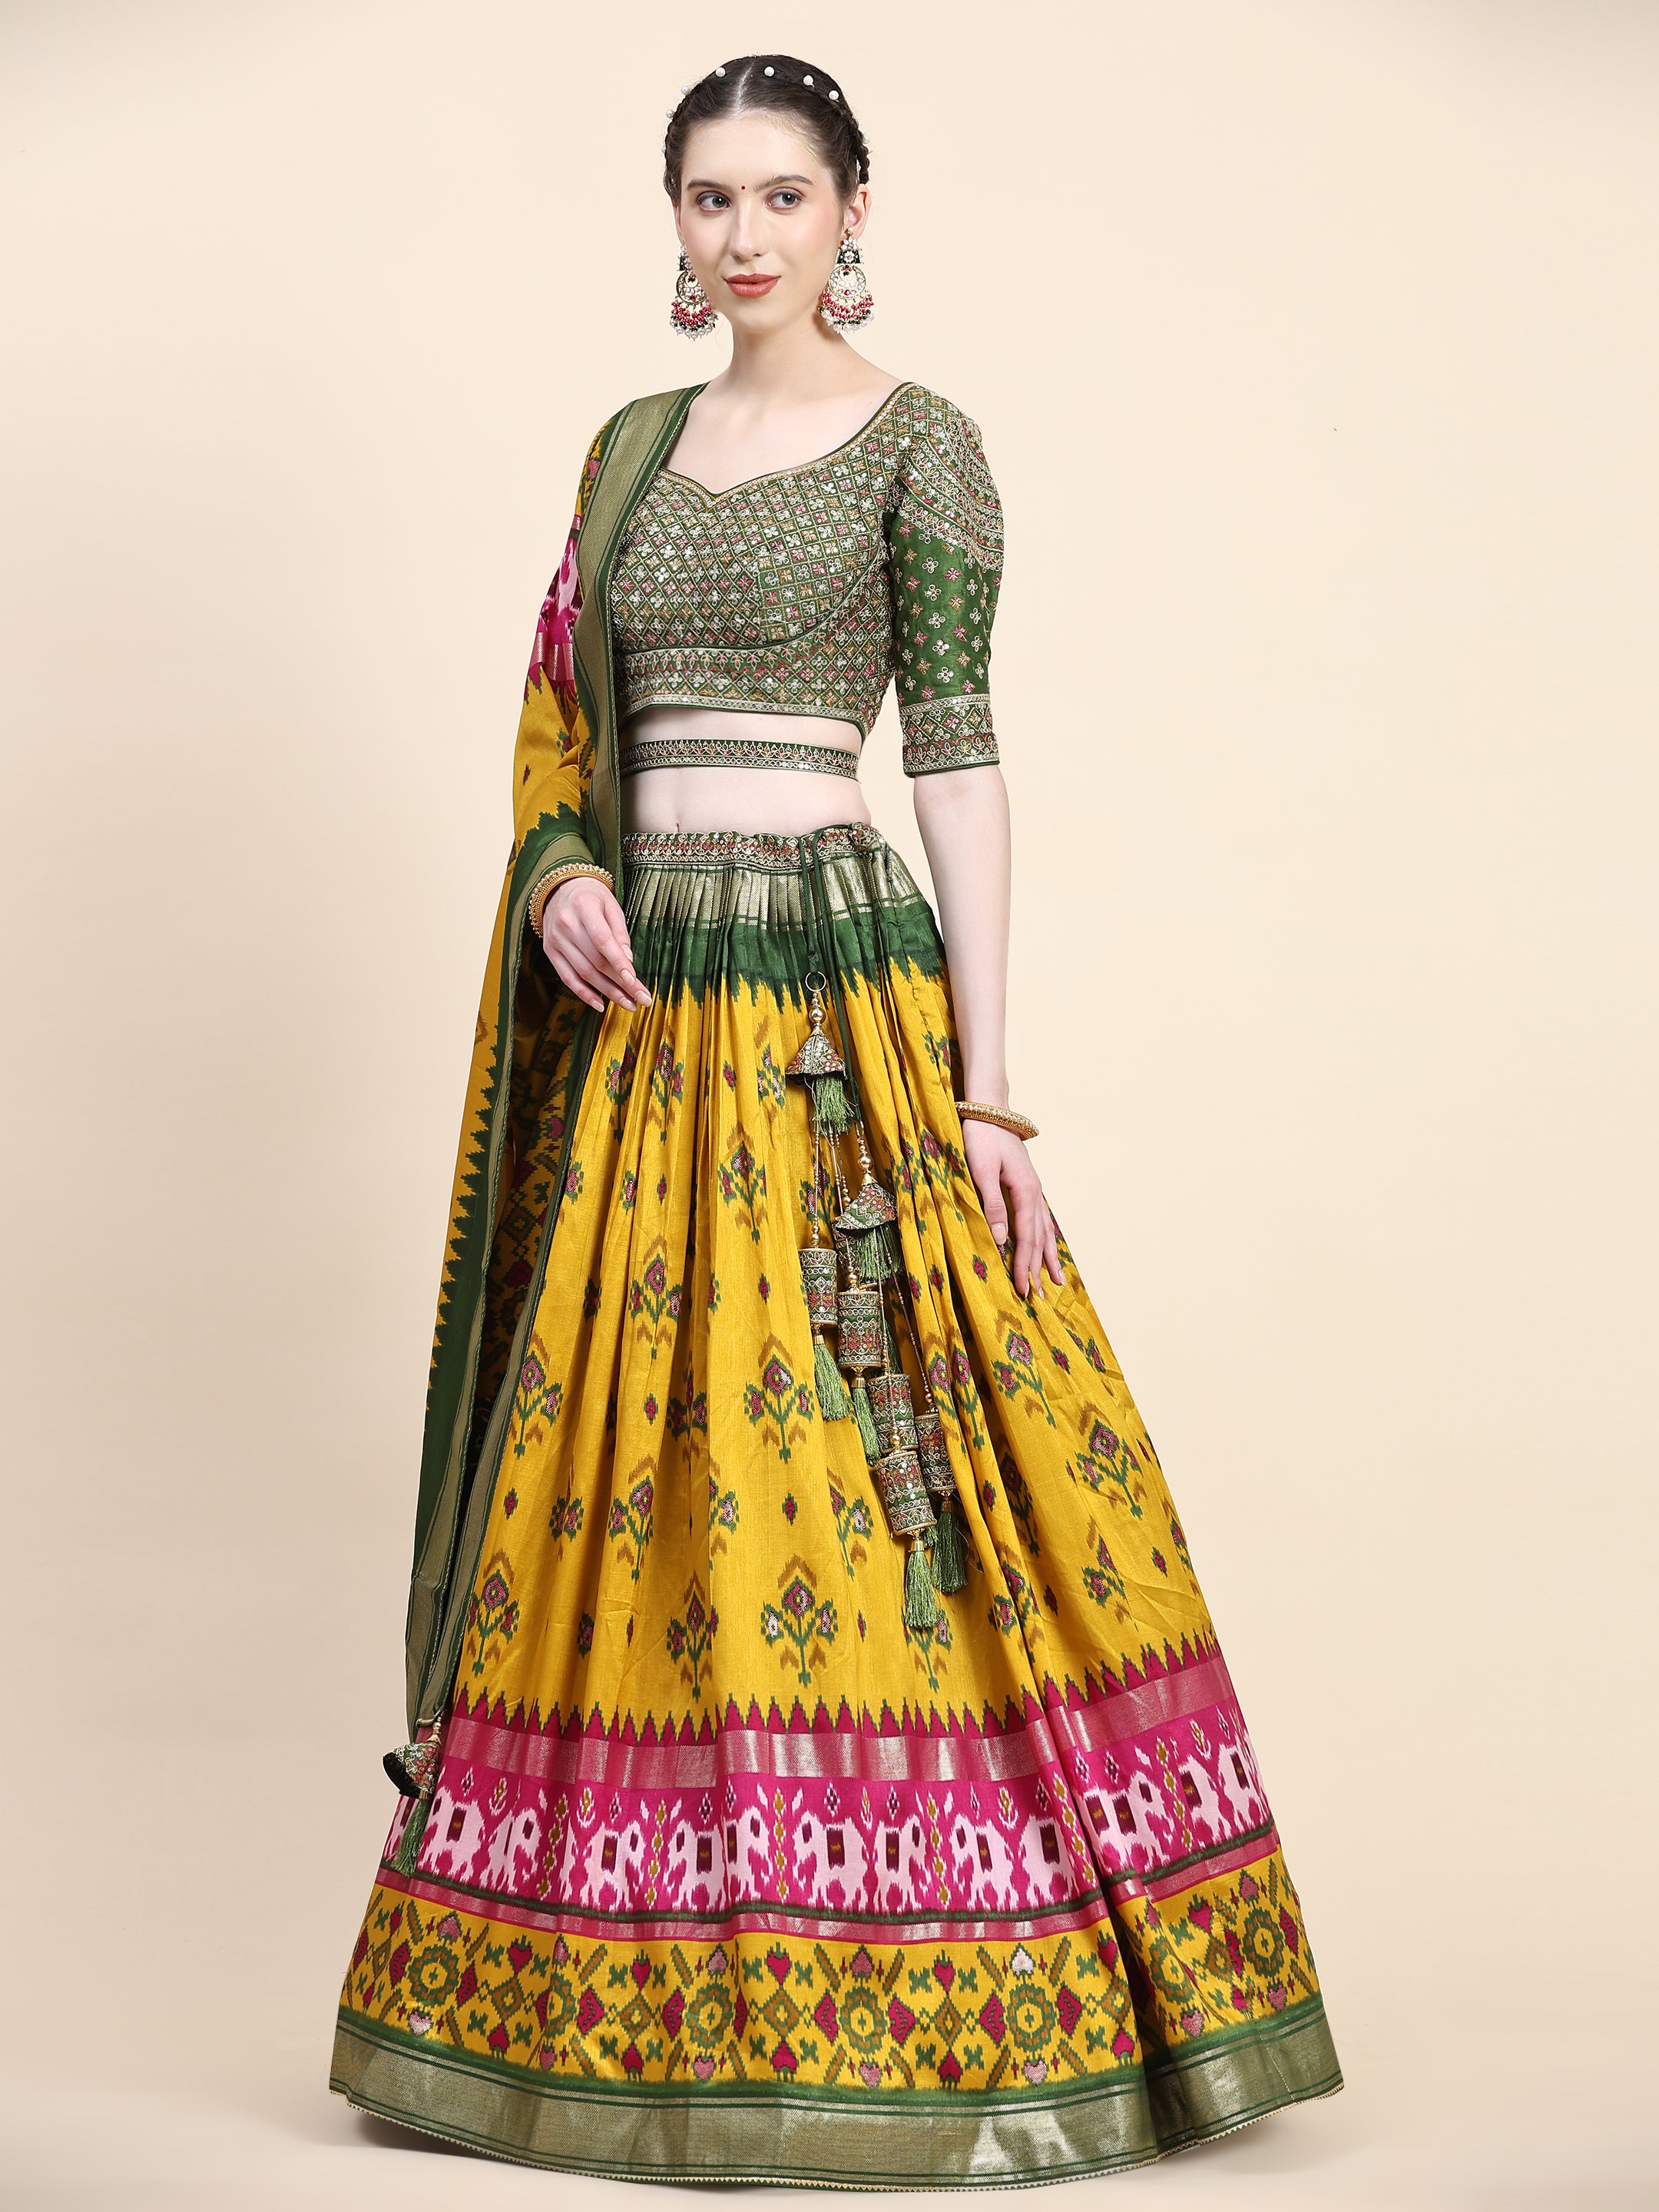 Saree converted into Beautiful lehenga CropTop With Waist Belt | Maggam  works in rajahmundry | Lehenga designs, Bridal blouse designs, Embroidery blouse  designs